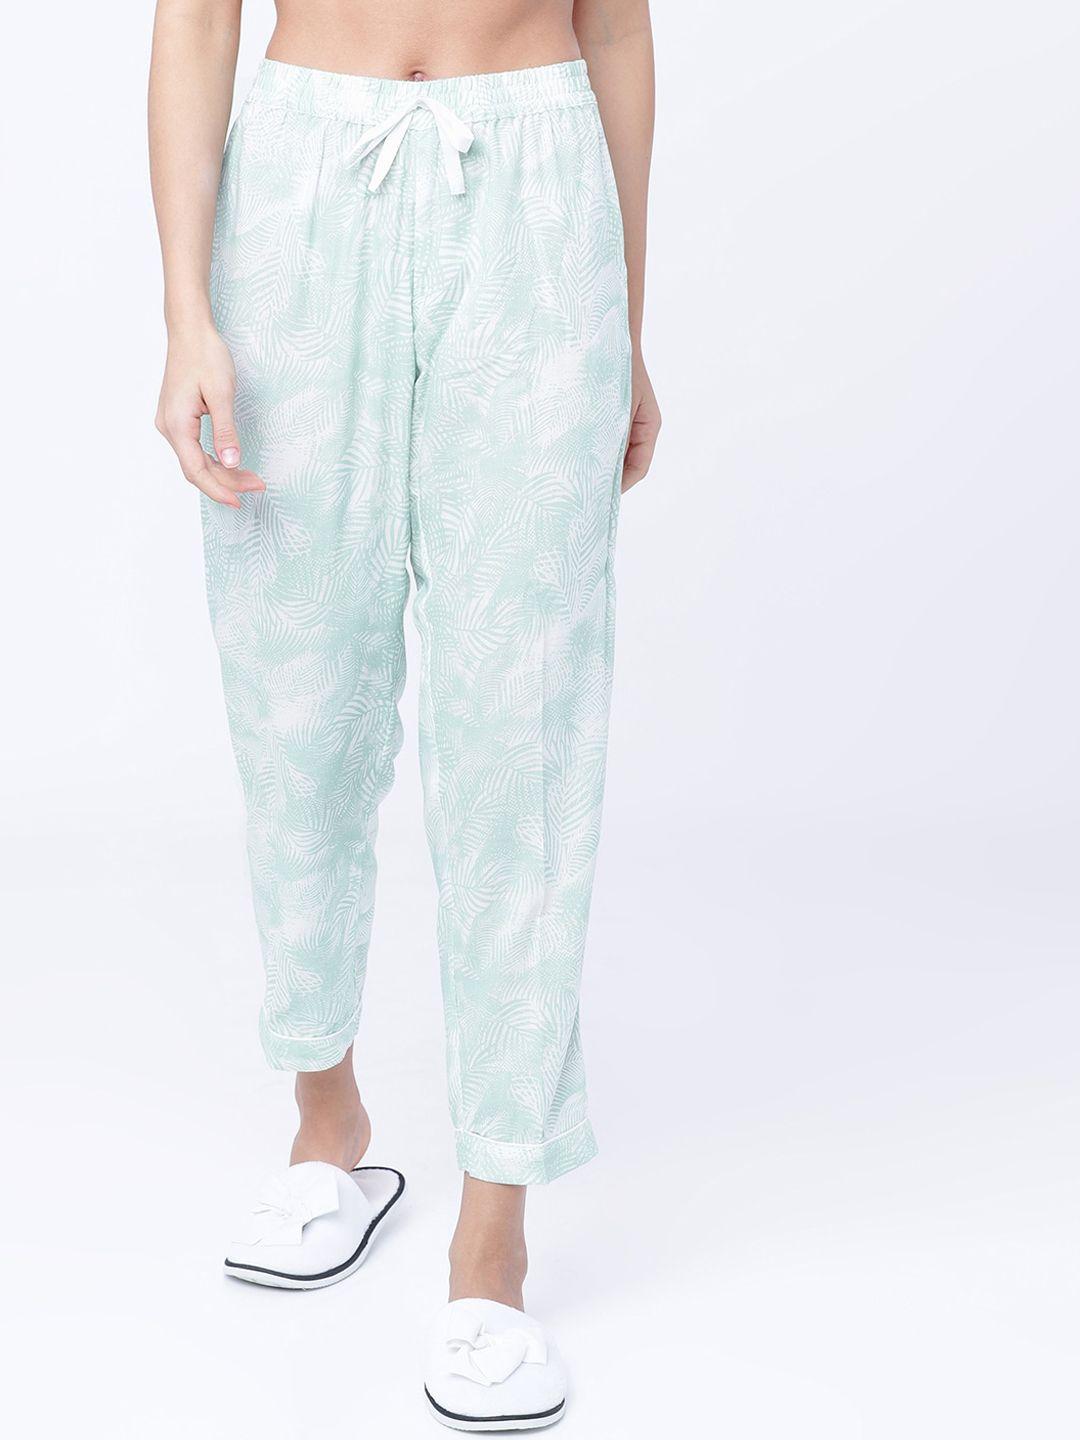 tokyo talkies women blue & white printed lounge pants